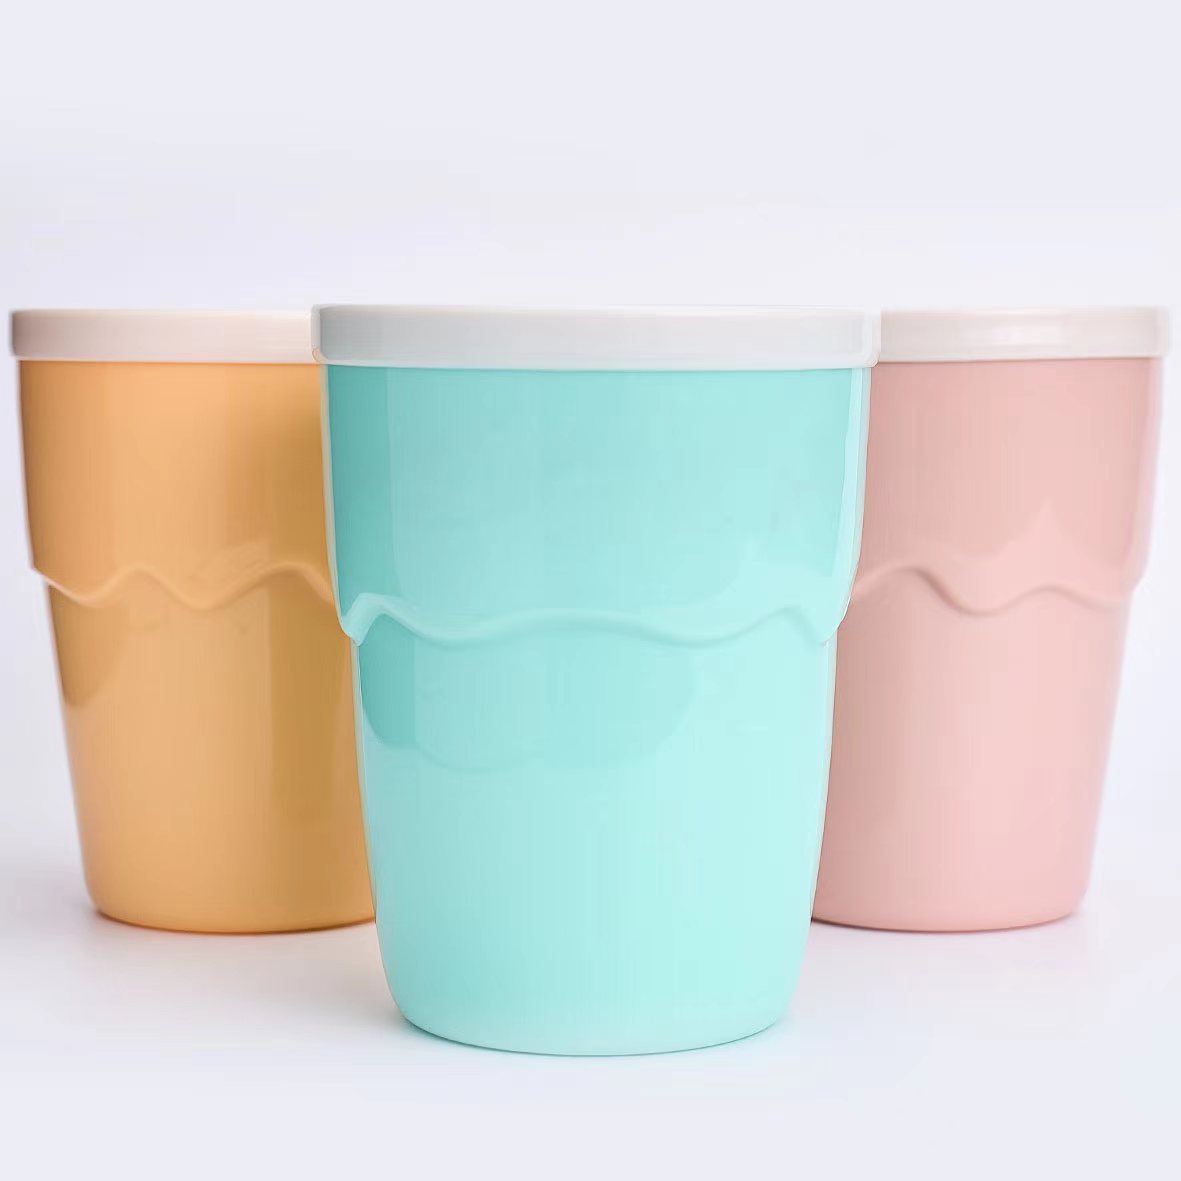 Shop Instant Slushy Maker Cup - Home & Garden Goodlifebean Giant Plushies